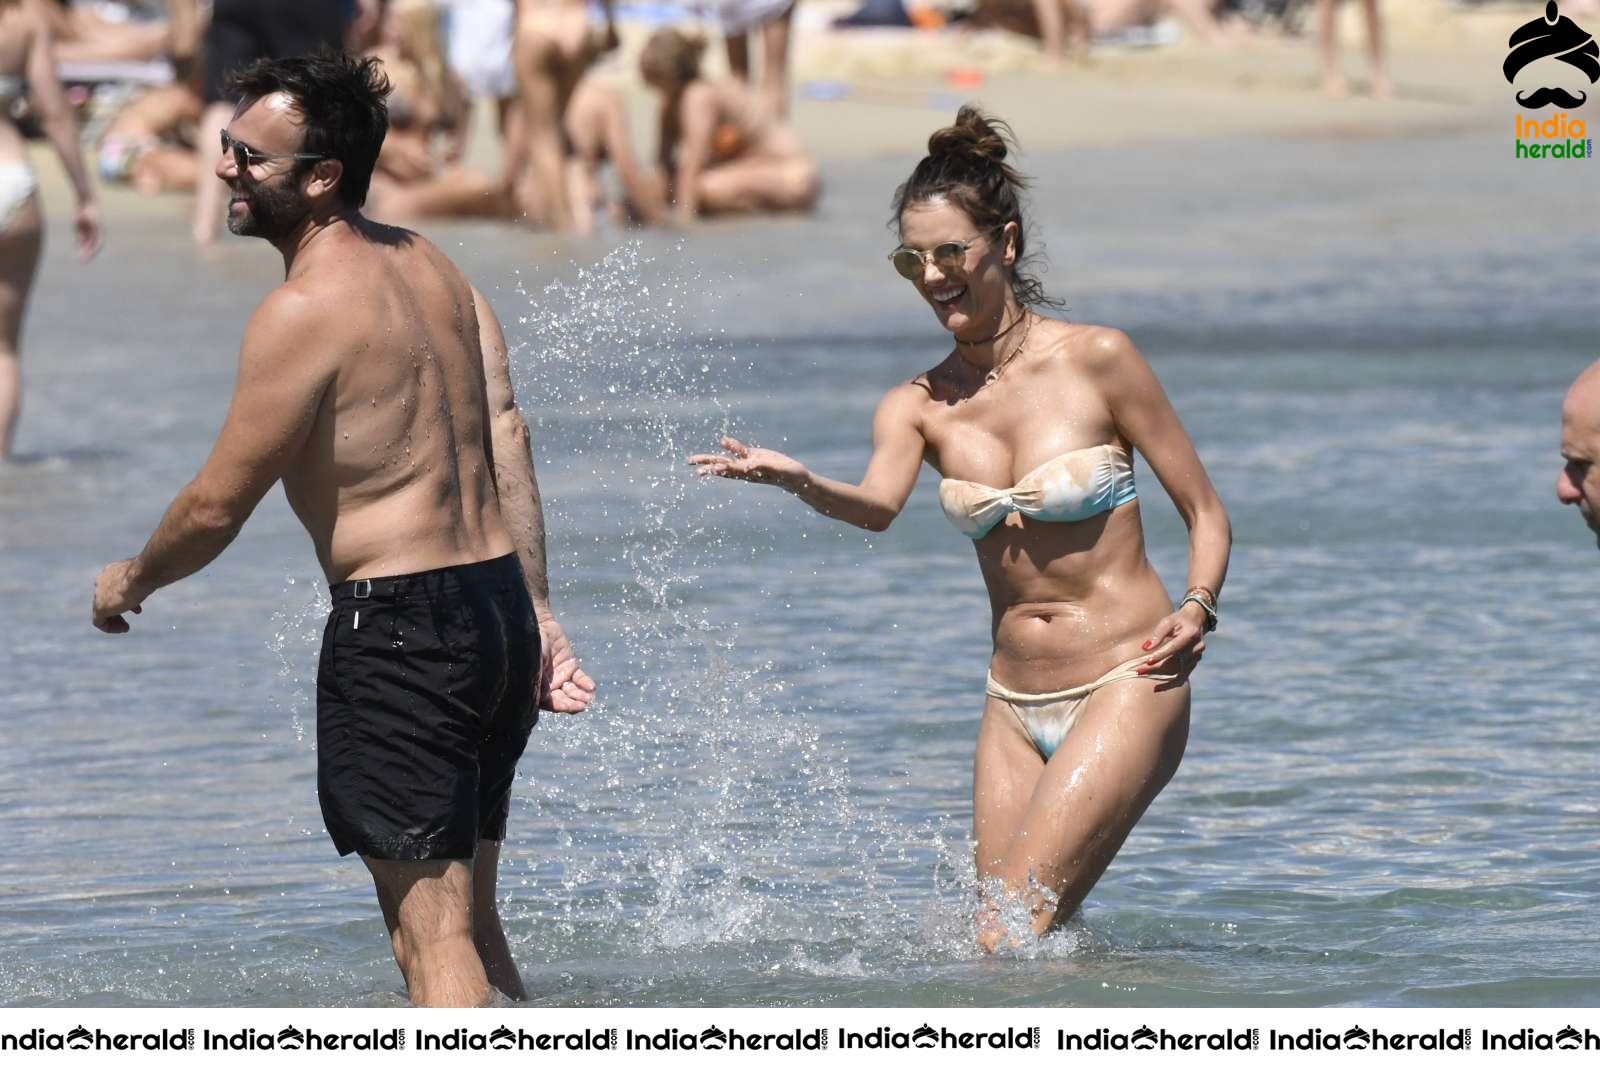 Alessandra Ambrosio in a Bikini at the beach in Mykonos Set 1